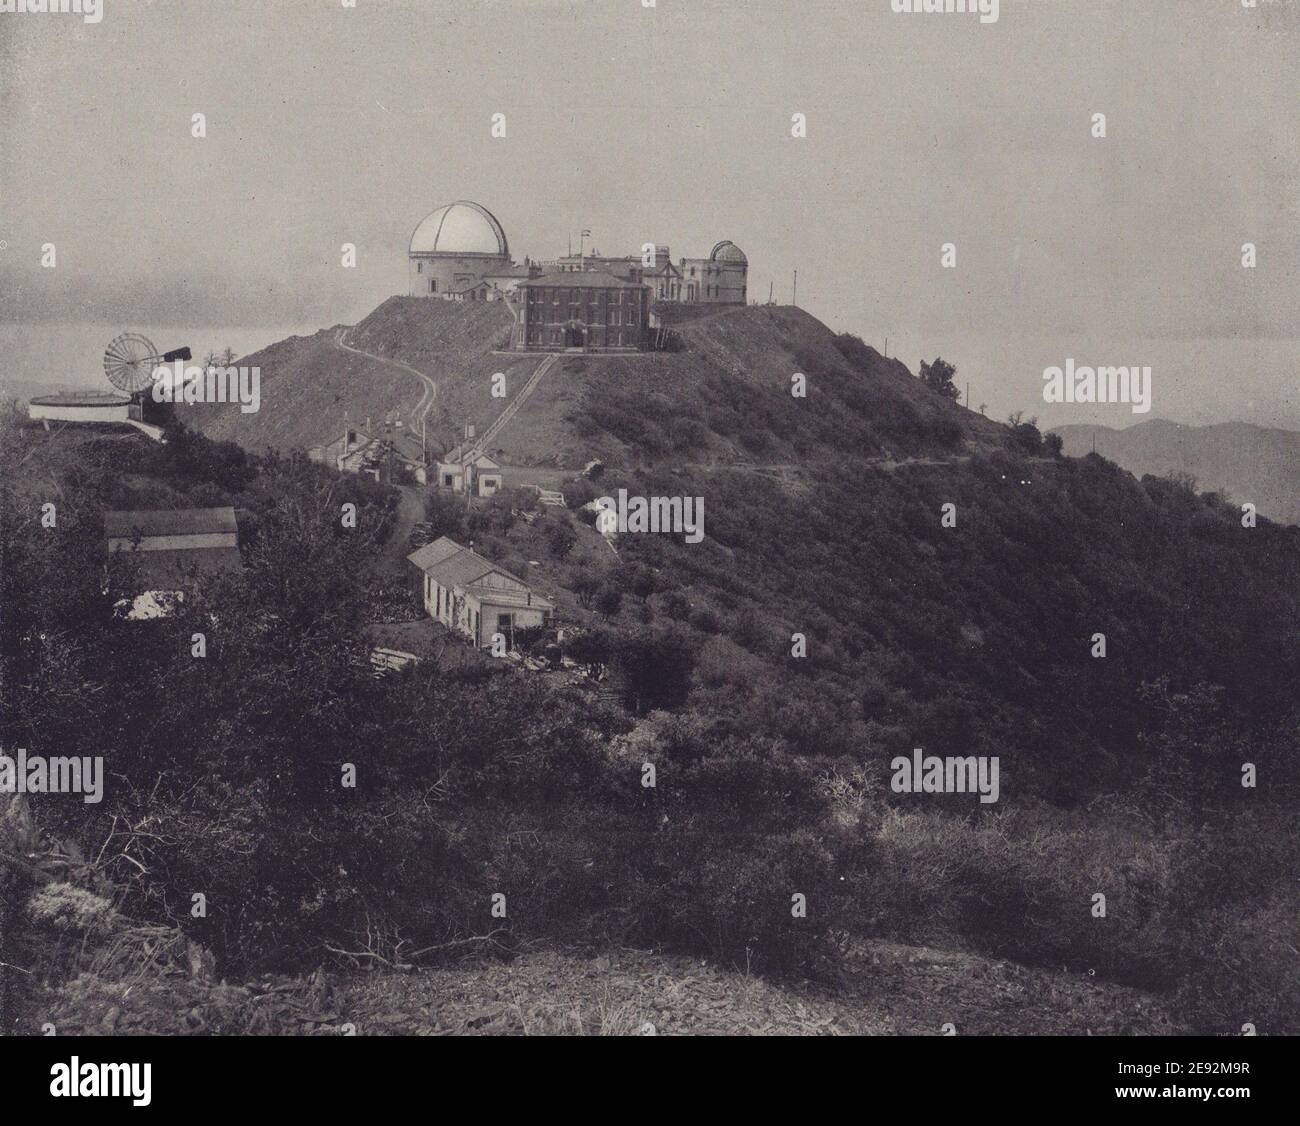 The Lick Observatory, Mount Hamilton, San Jose, California. STODDARD 1895 Stock Photo